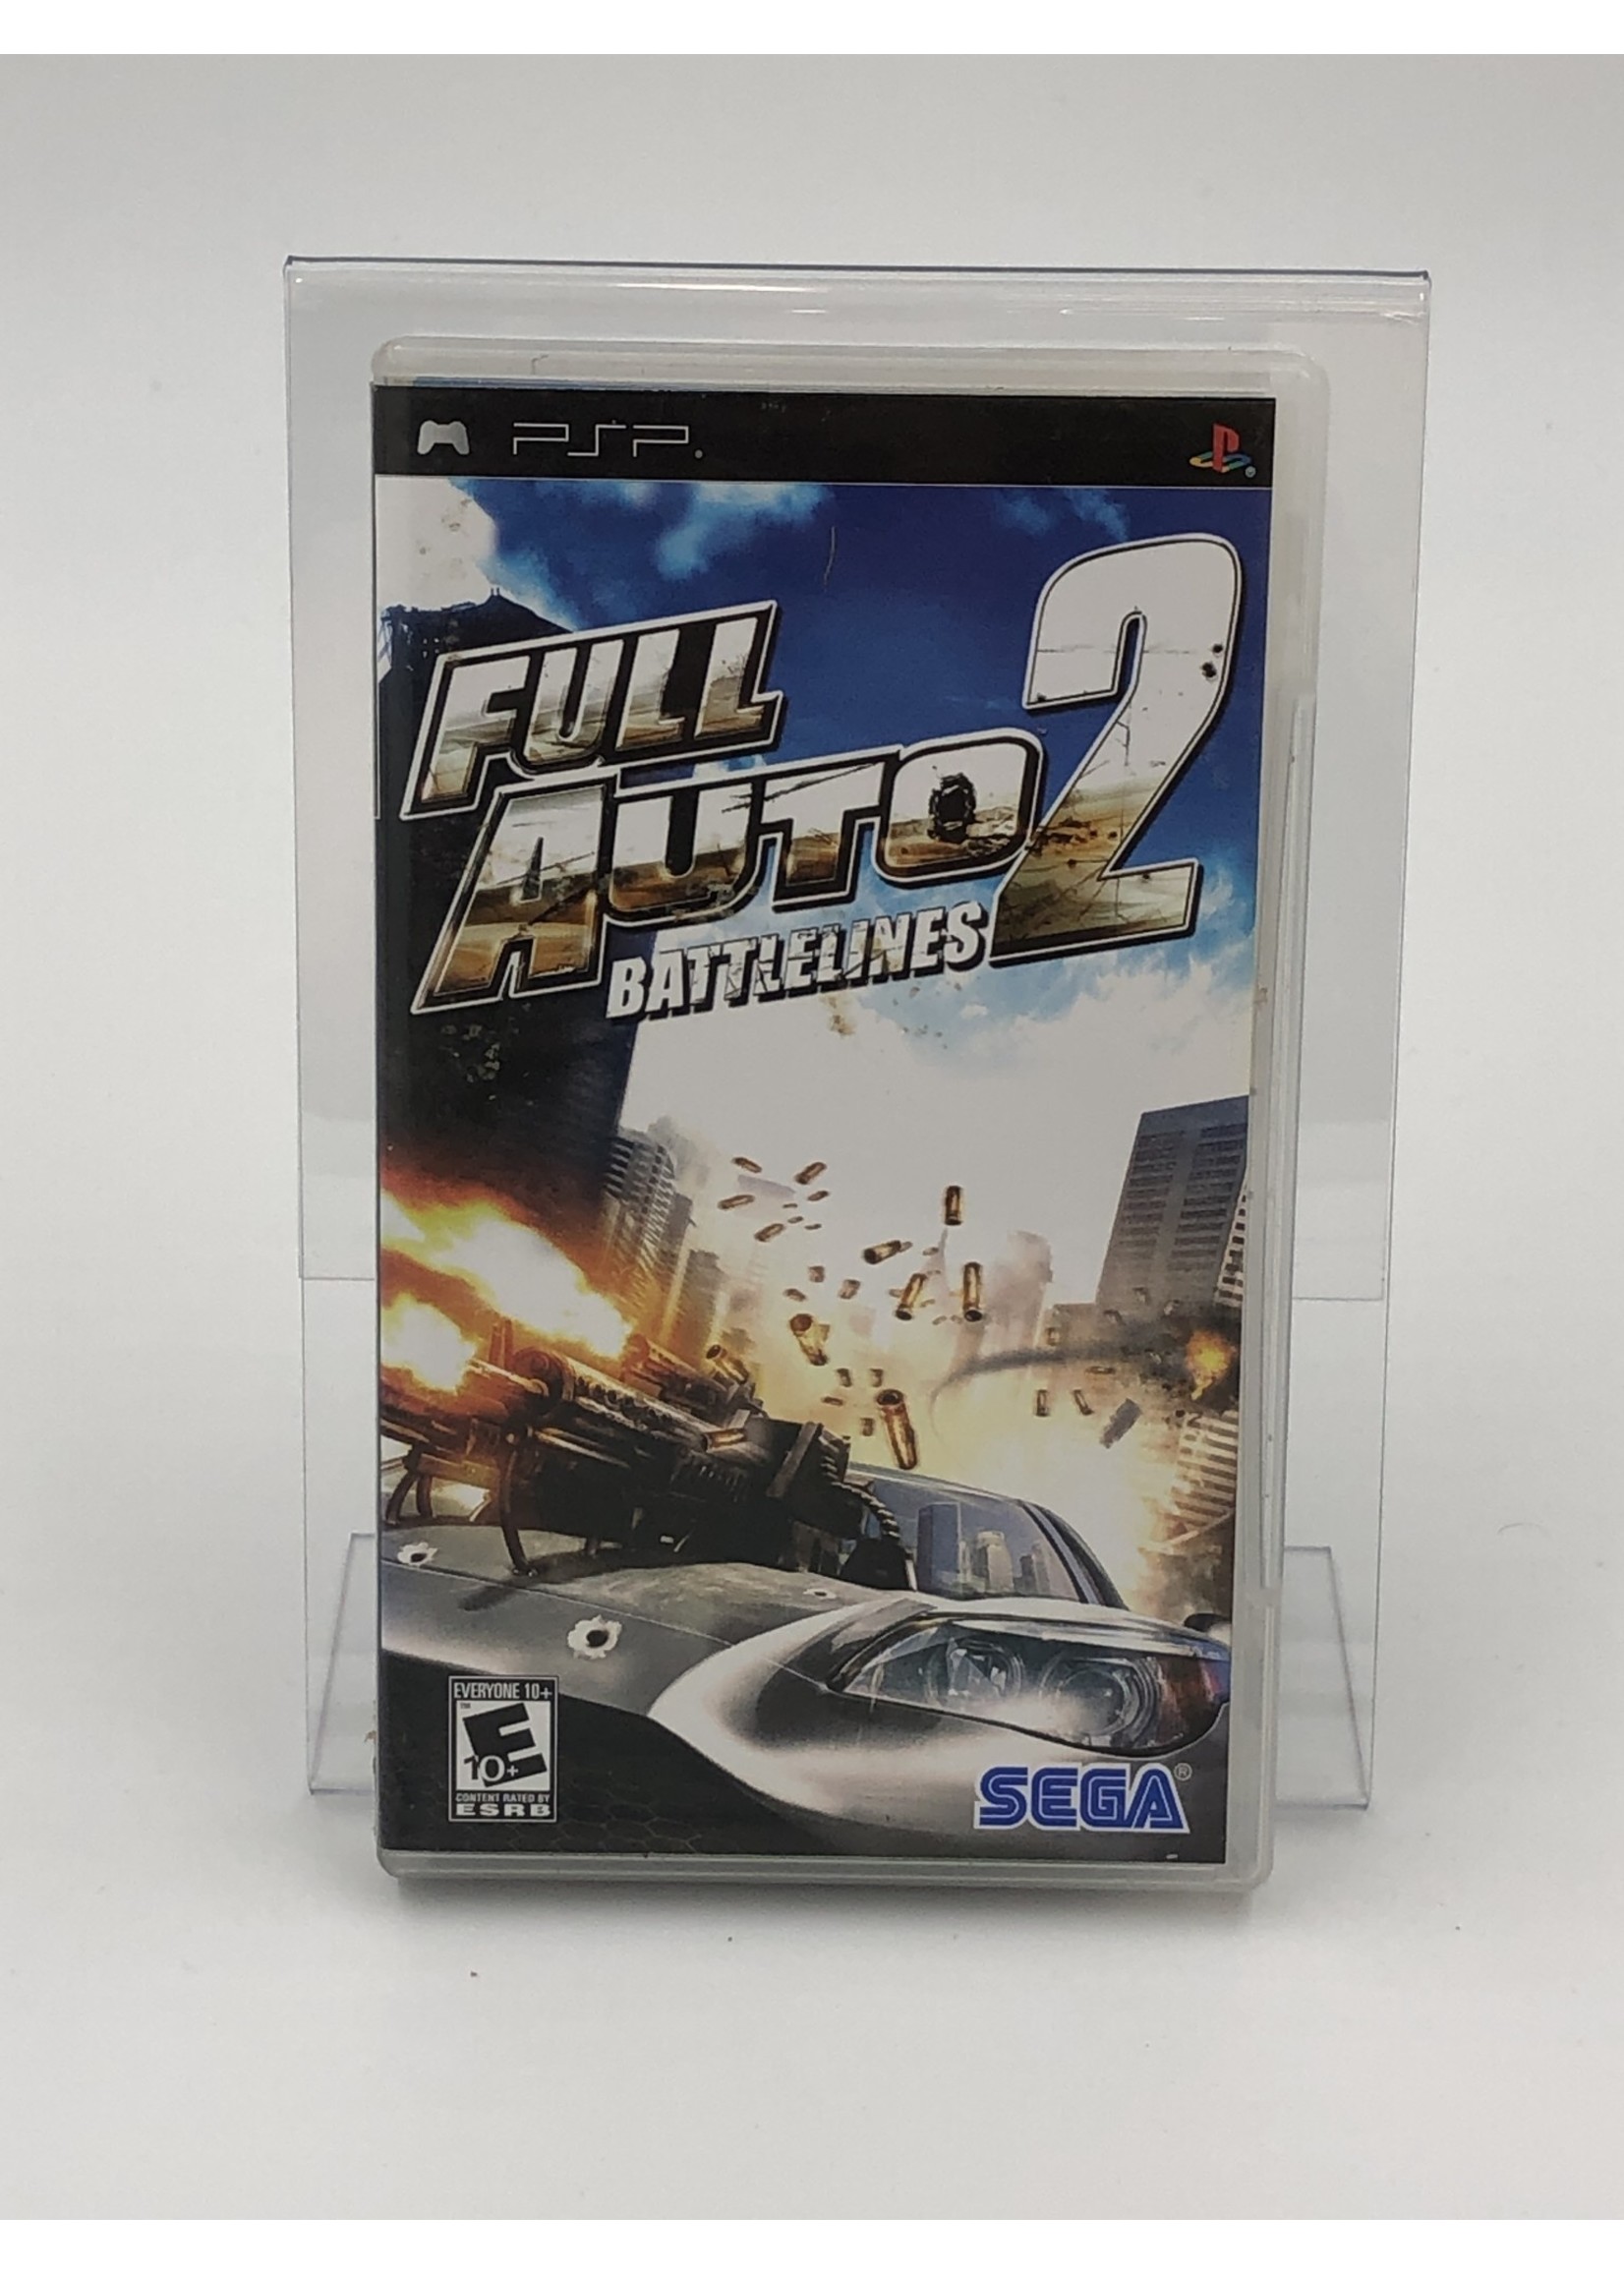 Sony   Full Auto 2: Battlelines - PSP